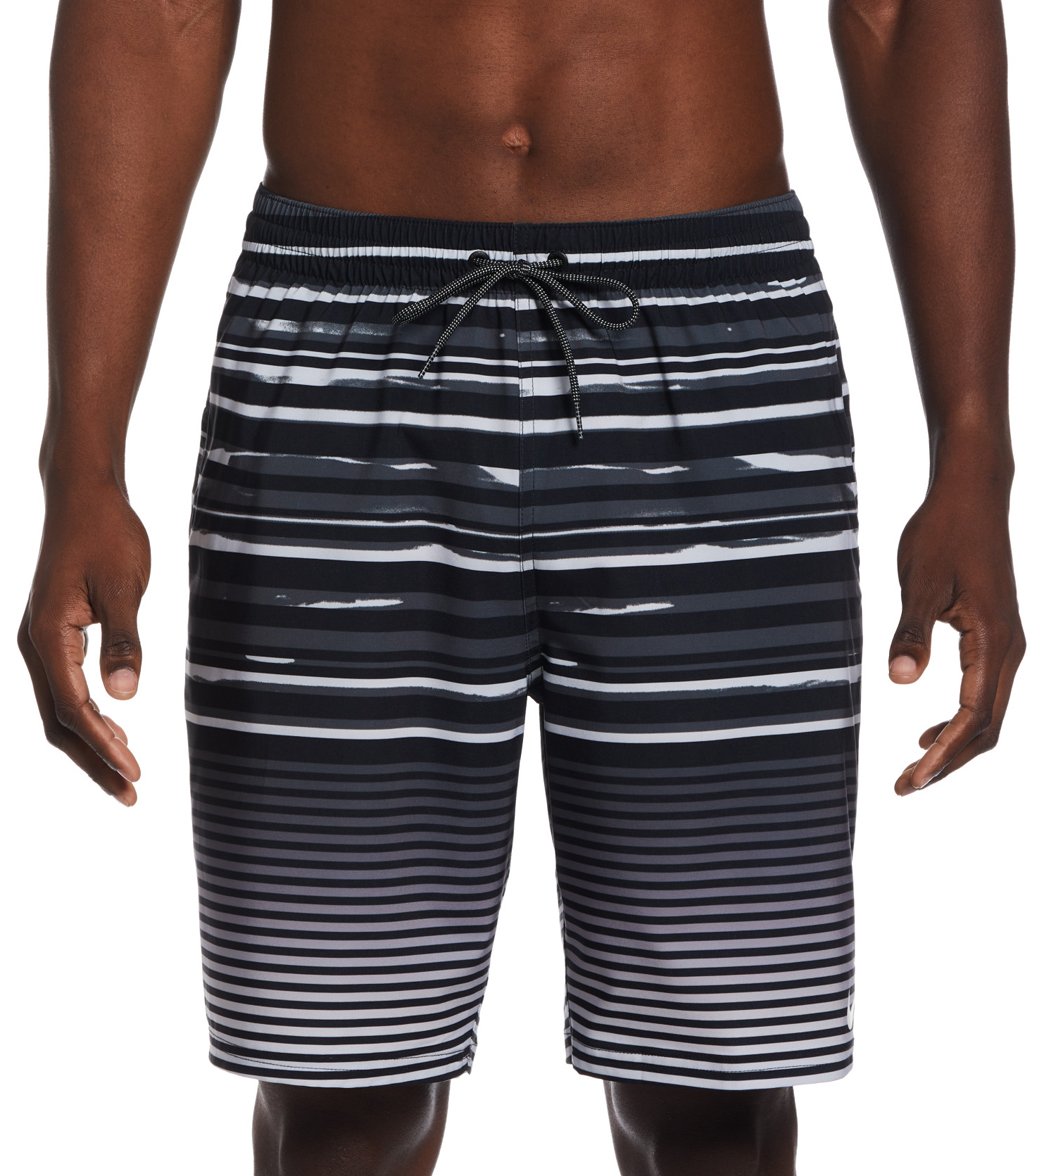 Nike Men's 20" Fade Stripe Breaker Swim Trunks at SwimOutlet.com